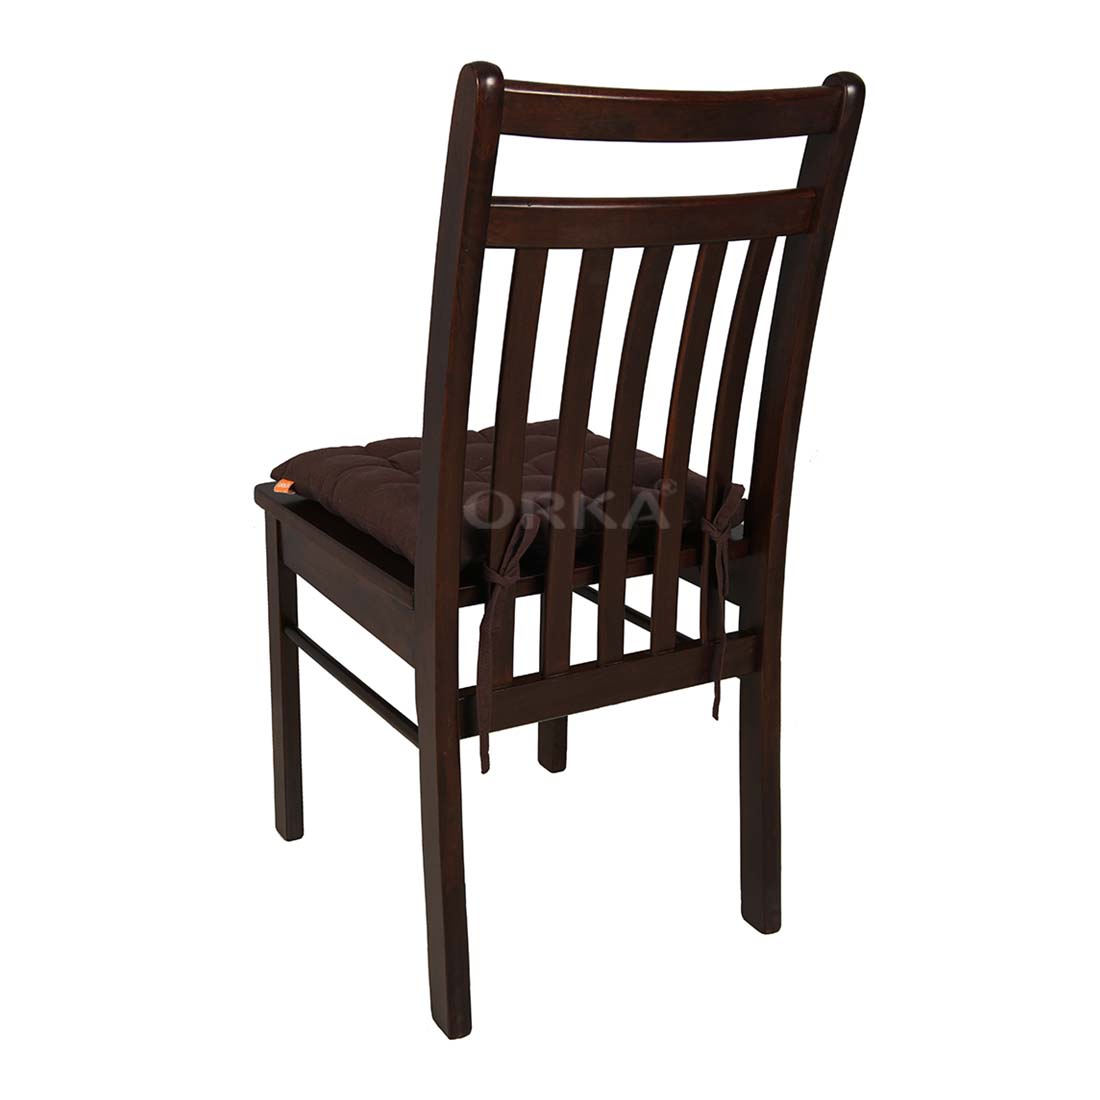 ORKA Chair Pad Brown Color